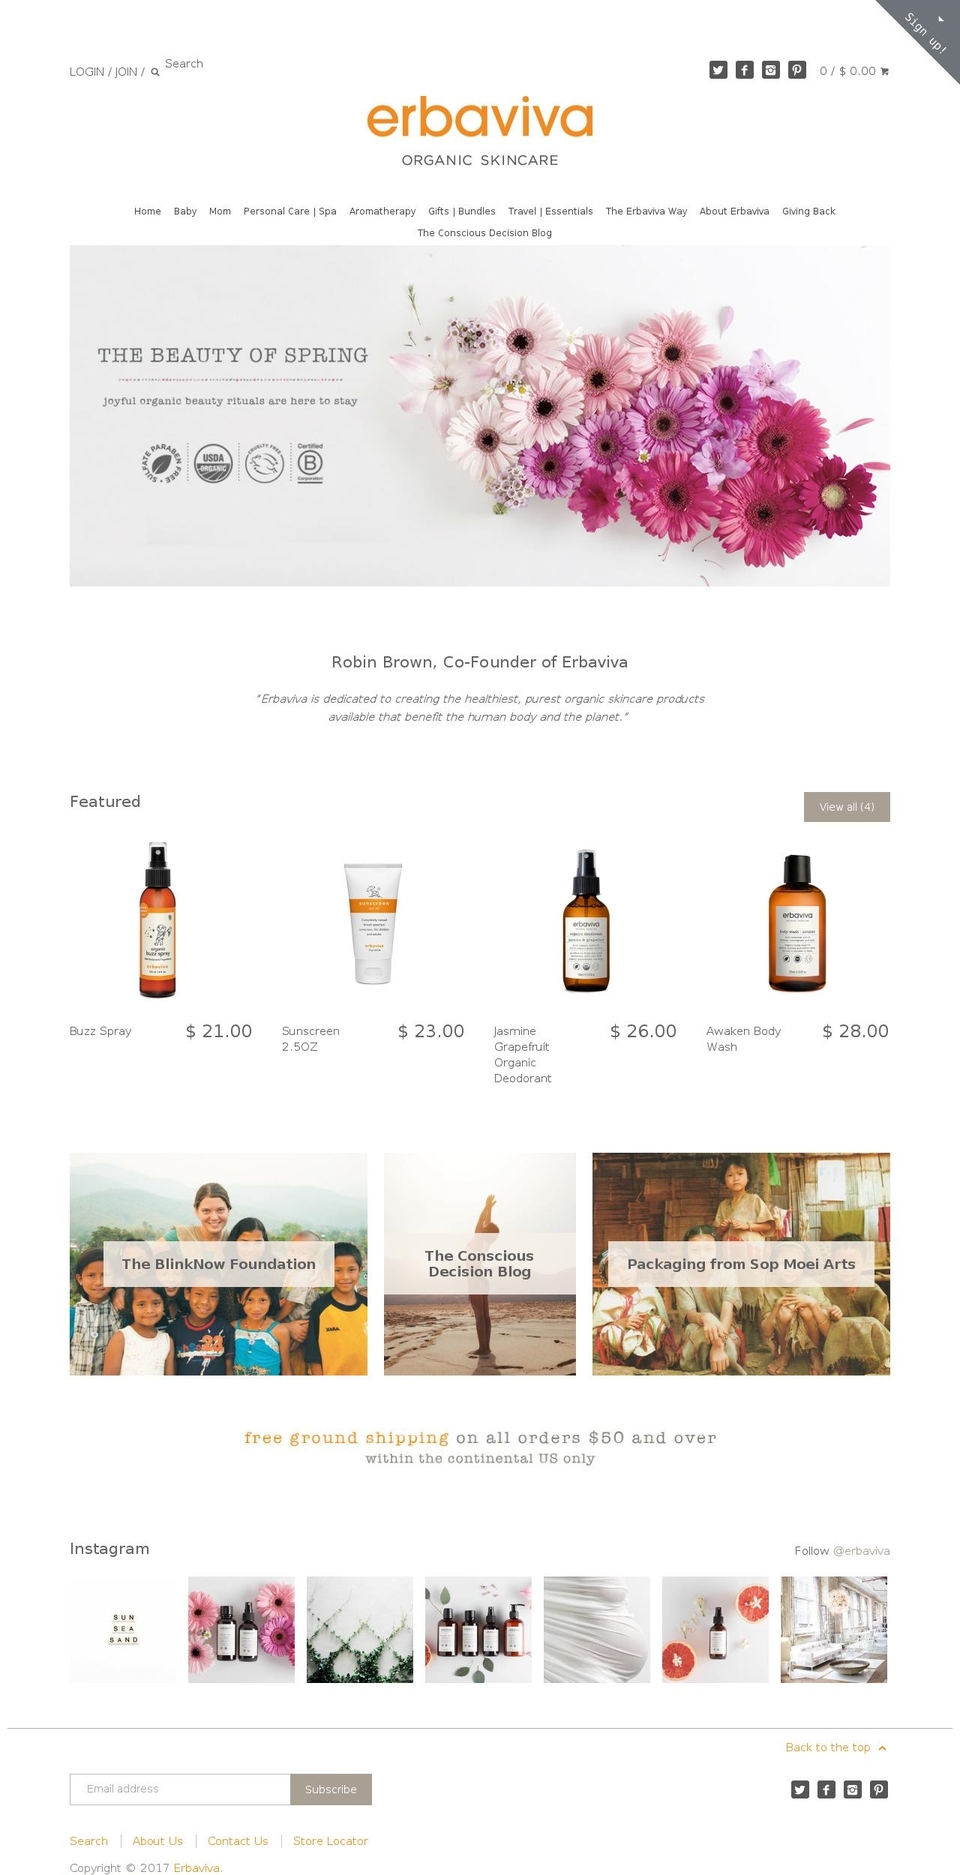 herbaviva.info shopify website screenshot